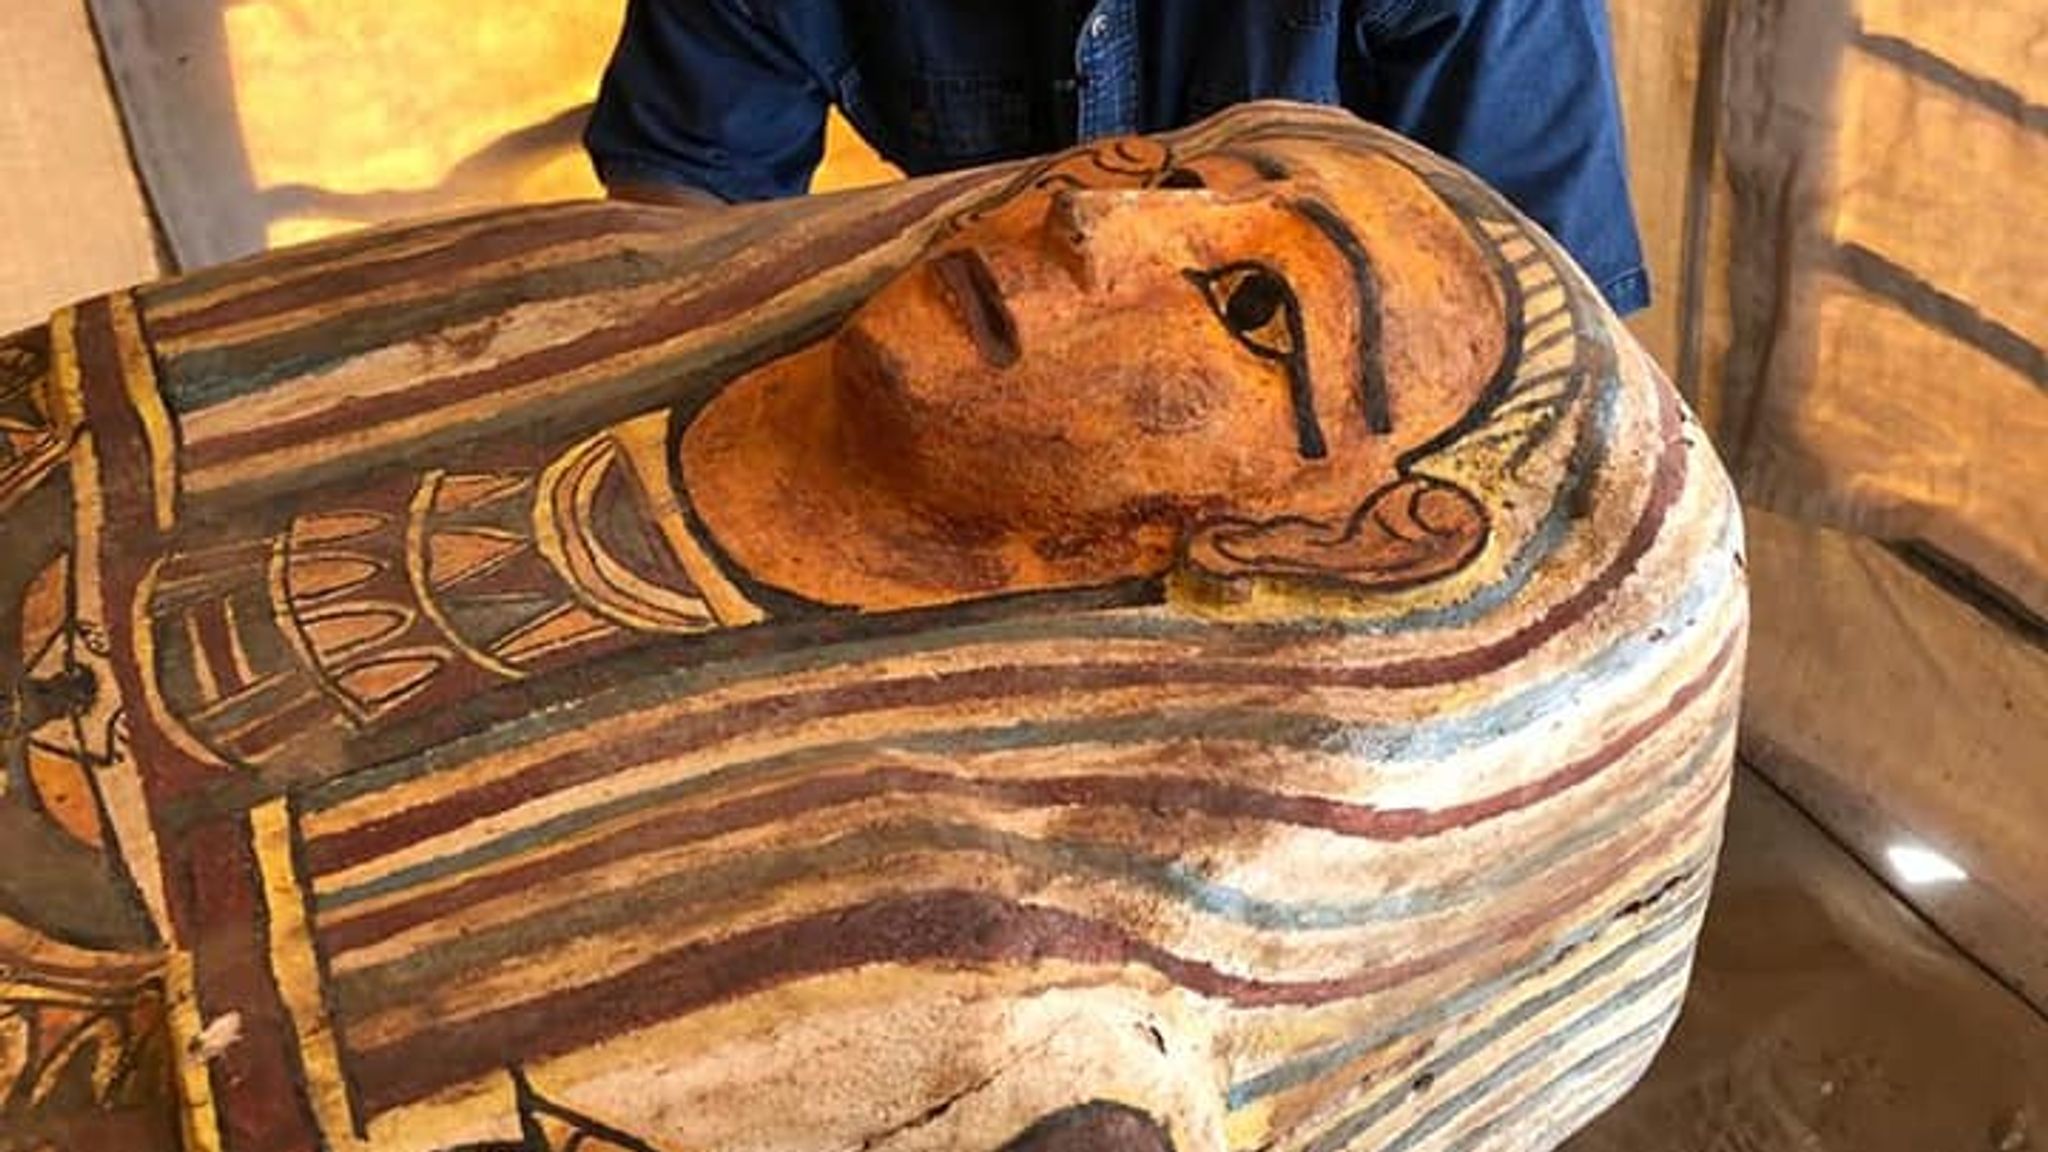 real egyptian sarcophagus